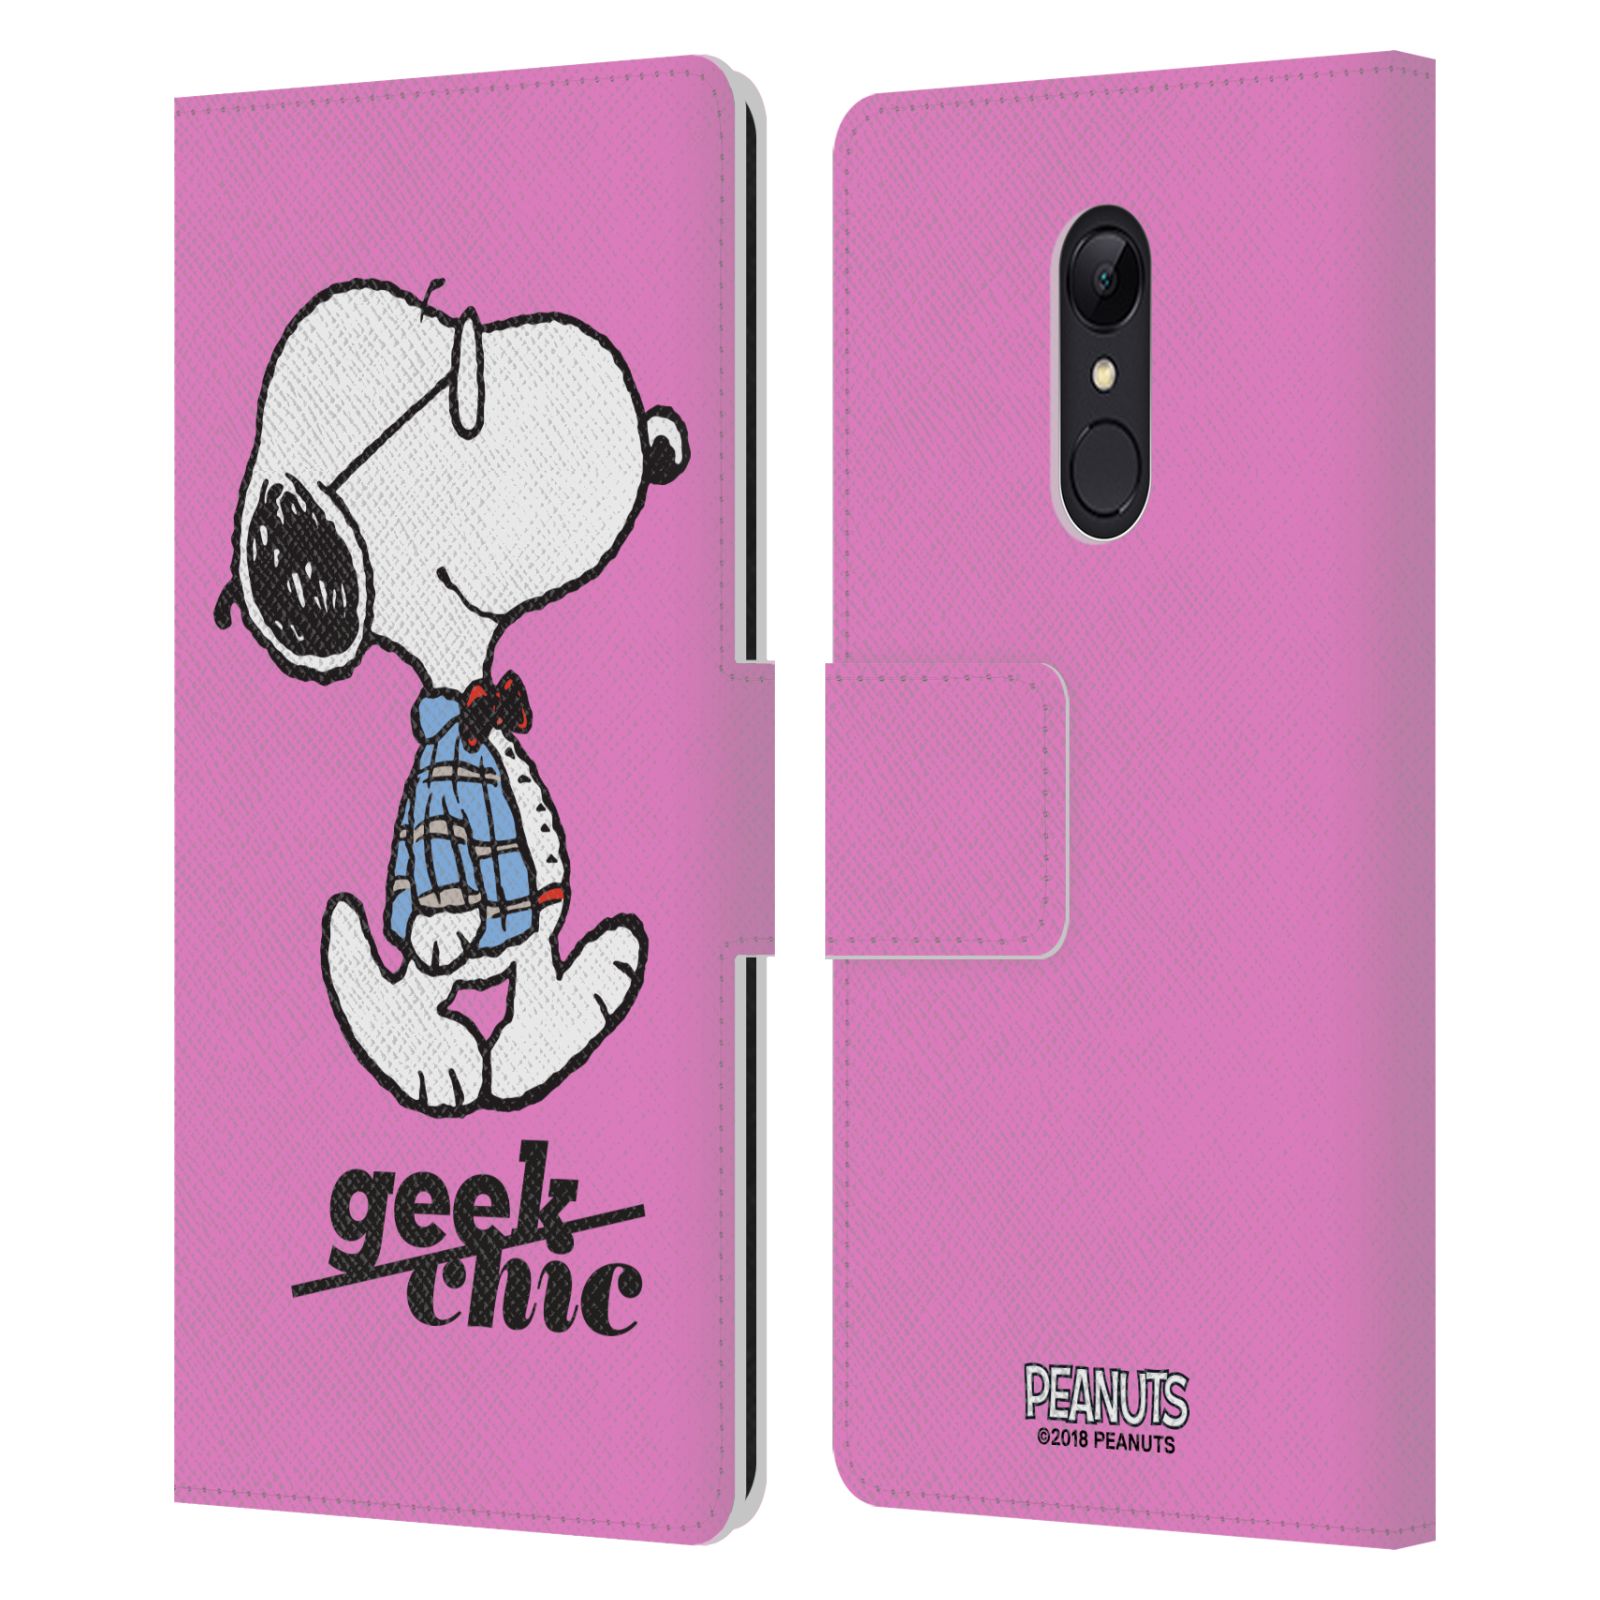 Pouzdro na mobil Xiaomi Redmi 5 - Head Case - Peanuts - růžový pejsek snoopy nerd